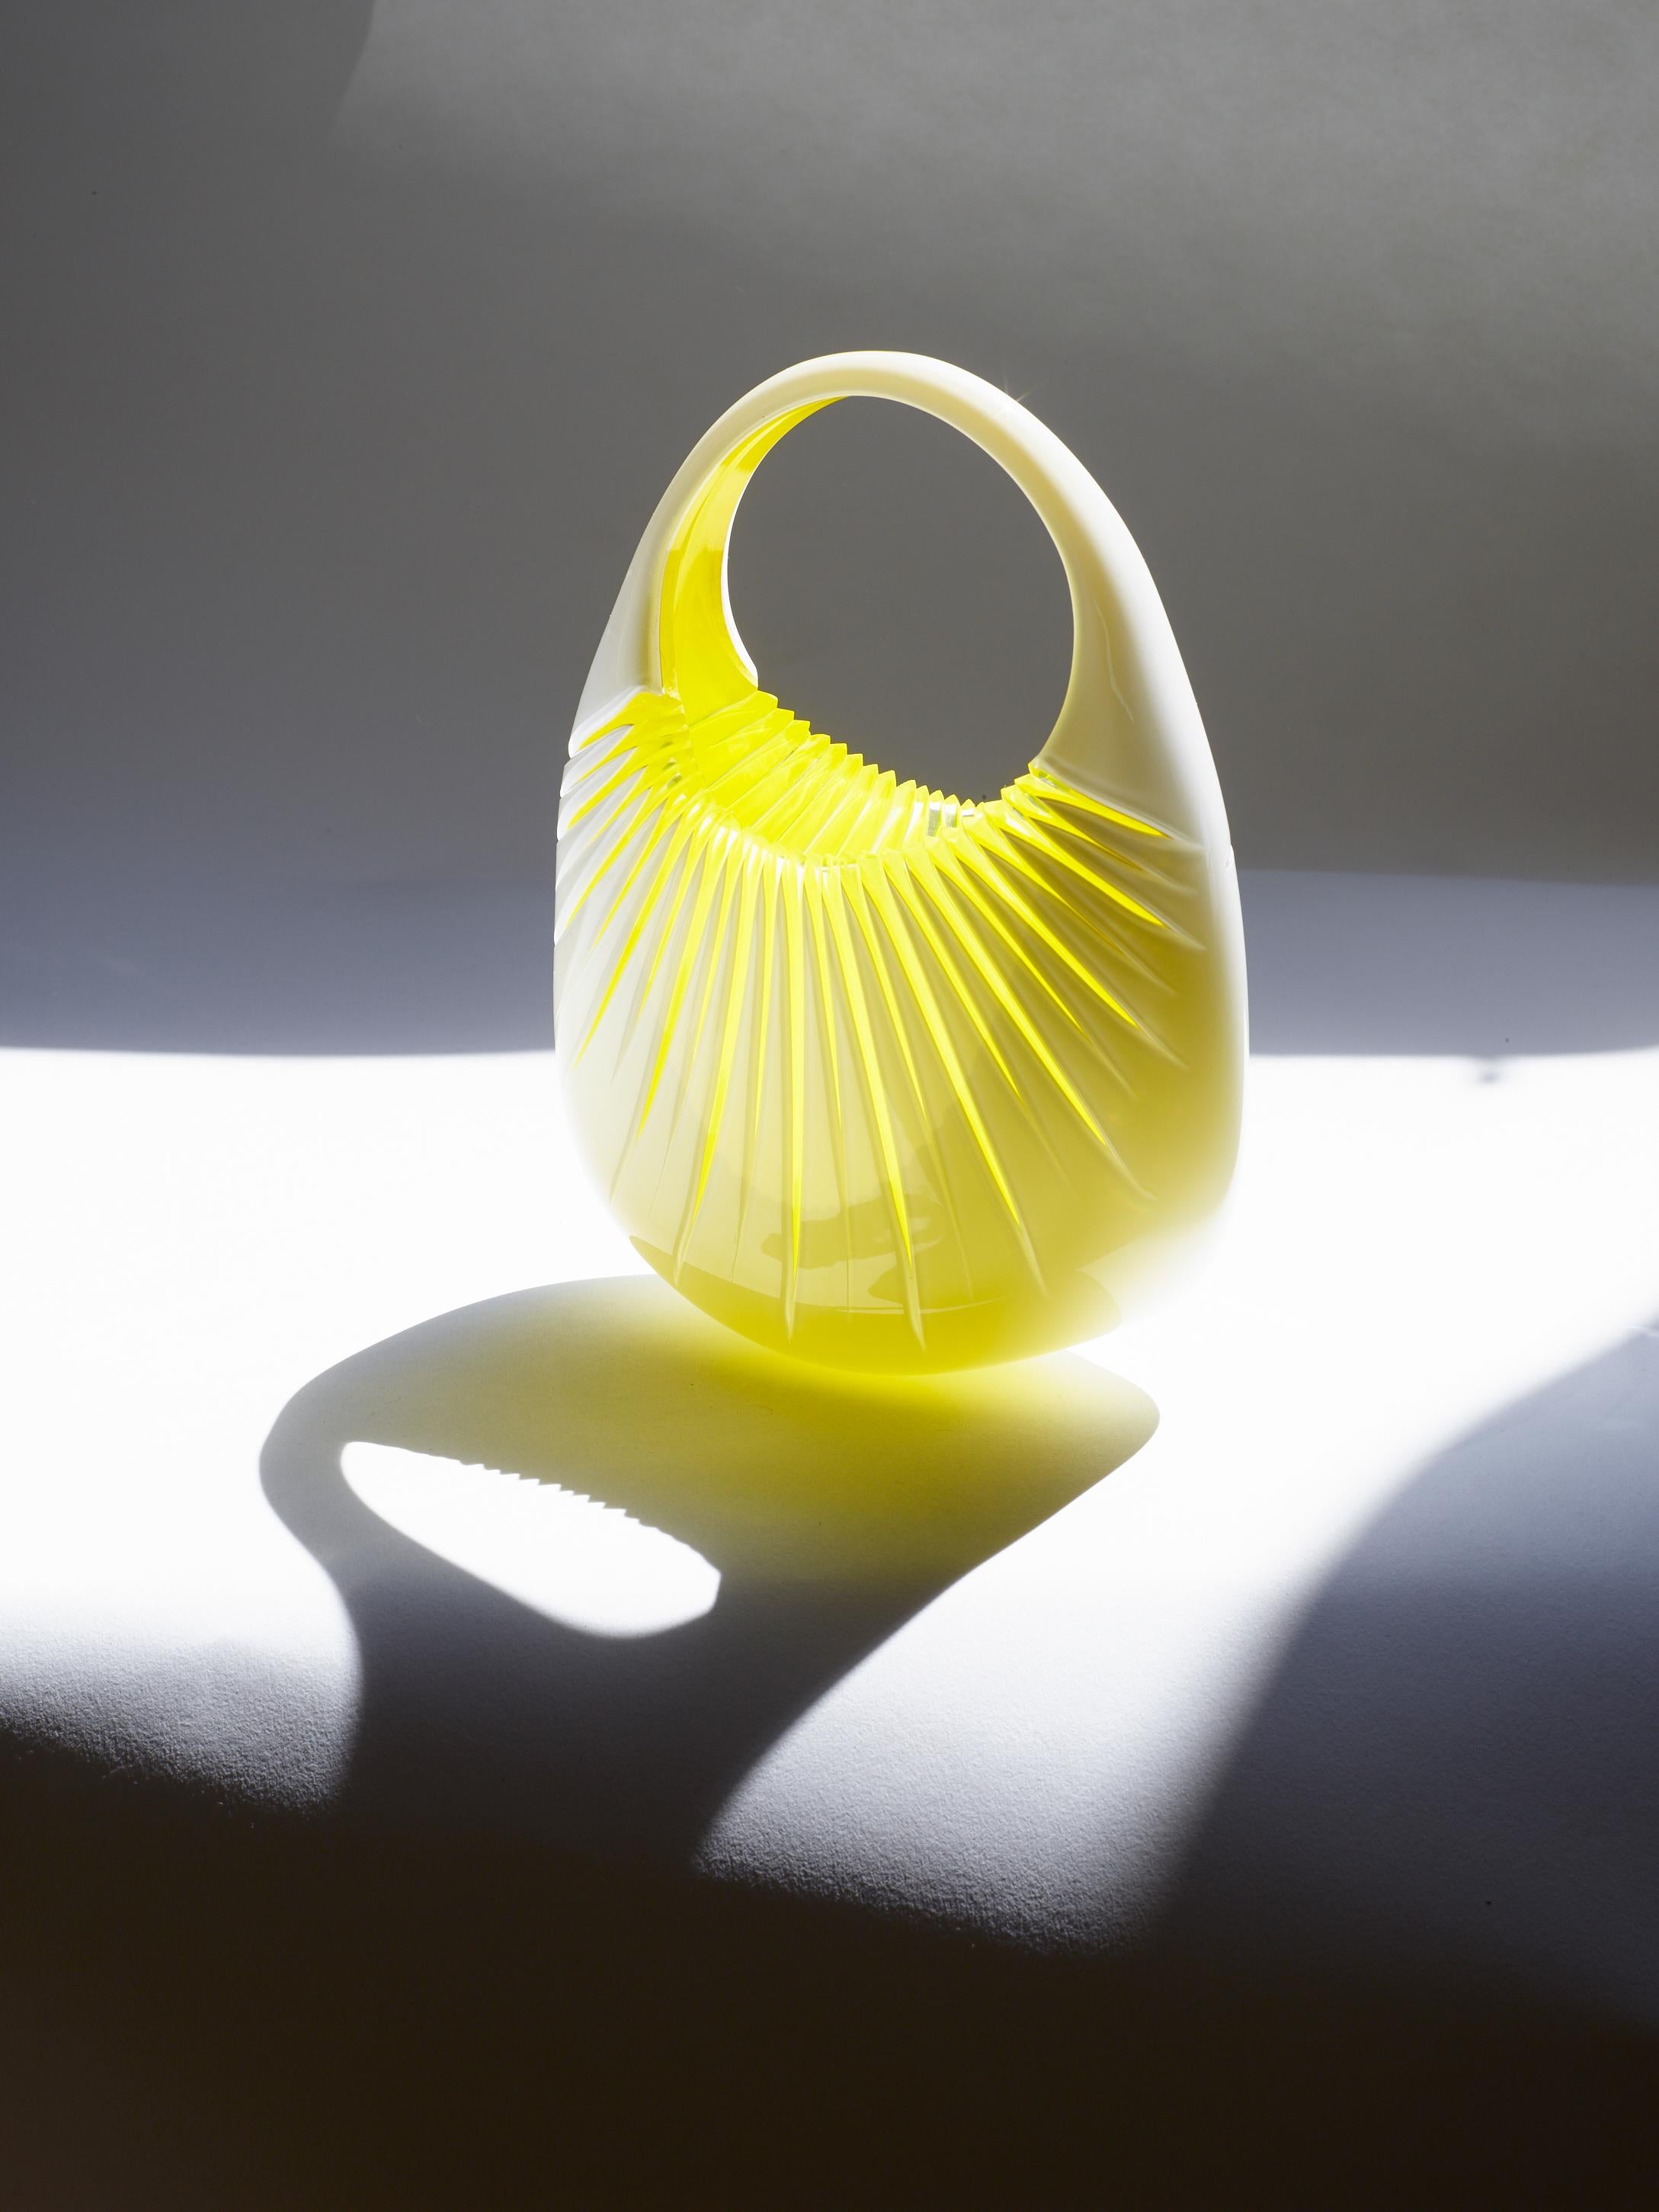 Glass Handbag with Yellow and White Engraved Sunburst by Raiffe 1